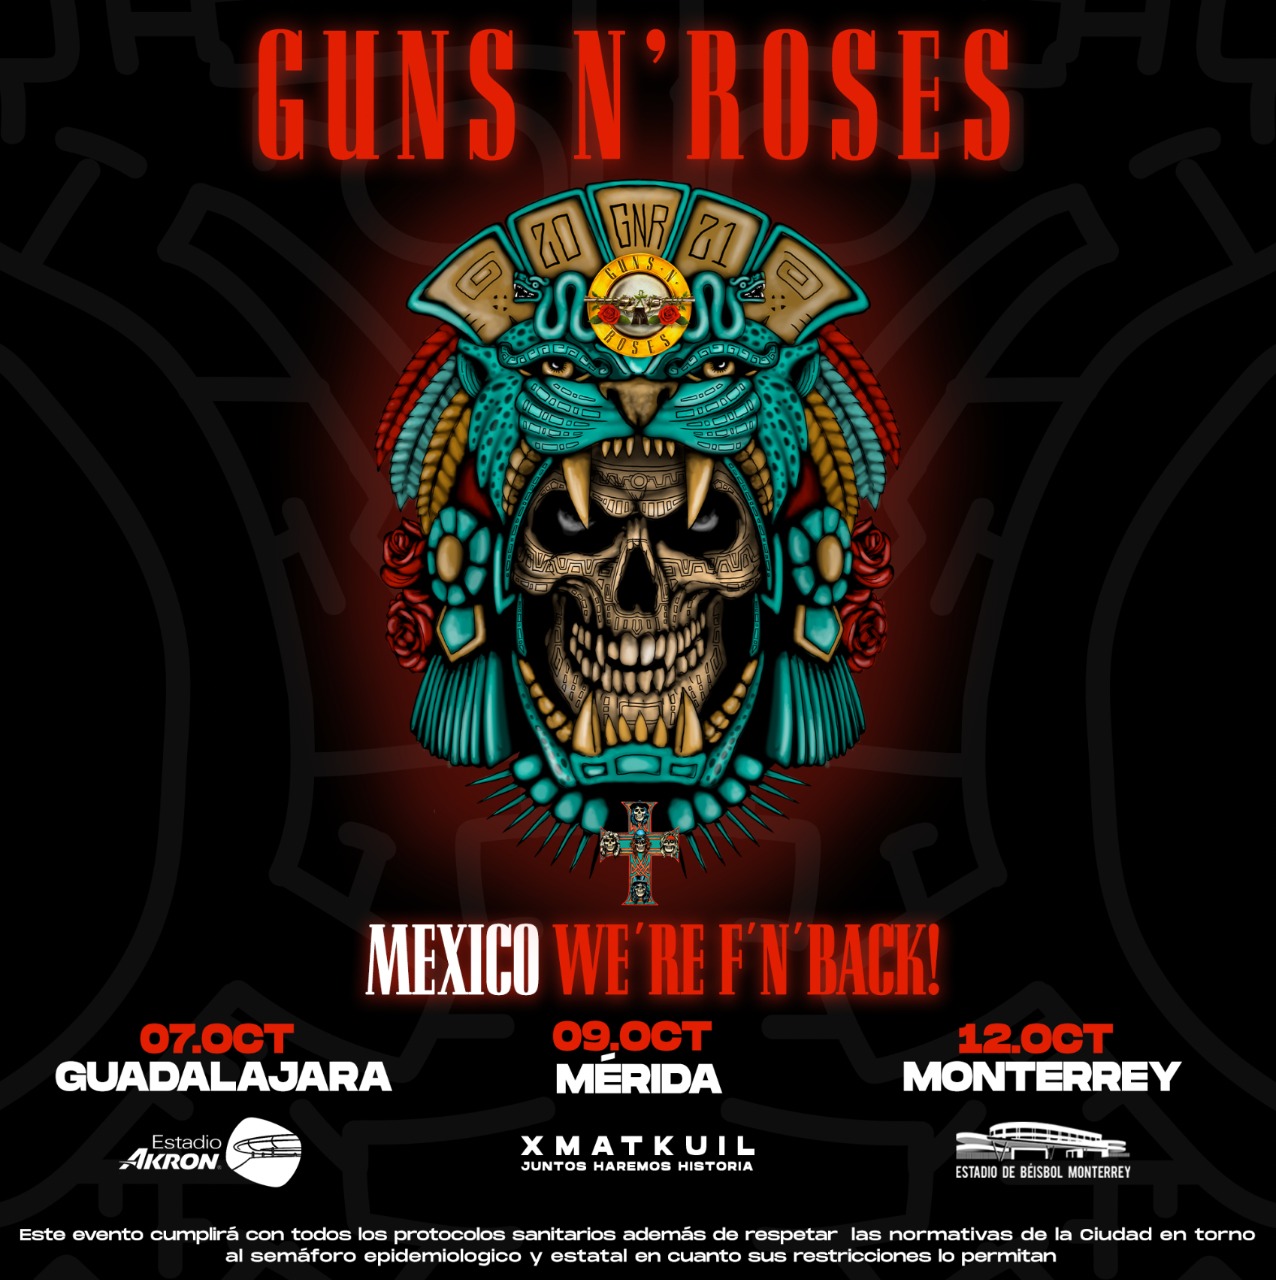 https://www.sopitas.com/musica/guns-n-roses-anuncia-conciertos-mexico-2021/